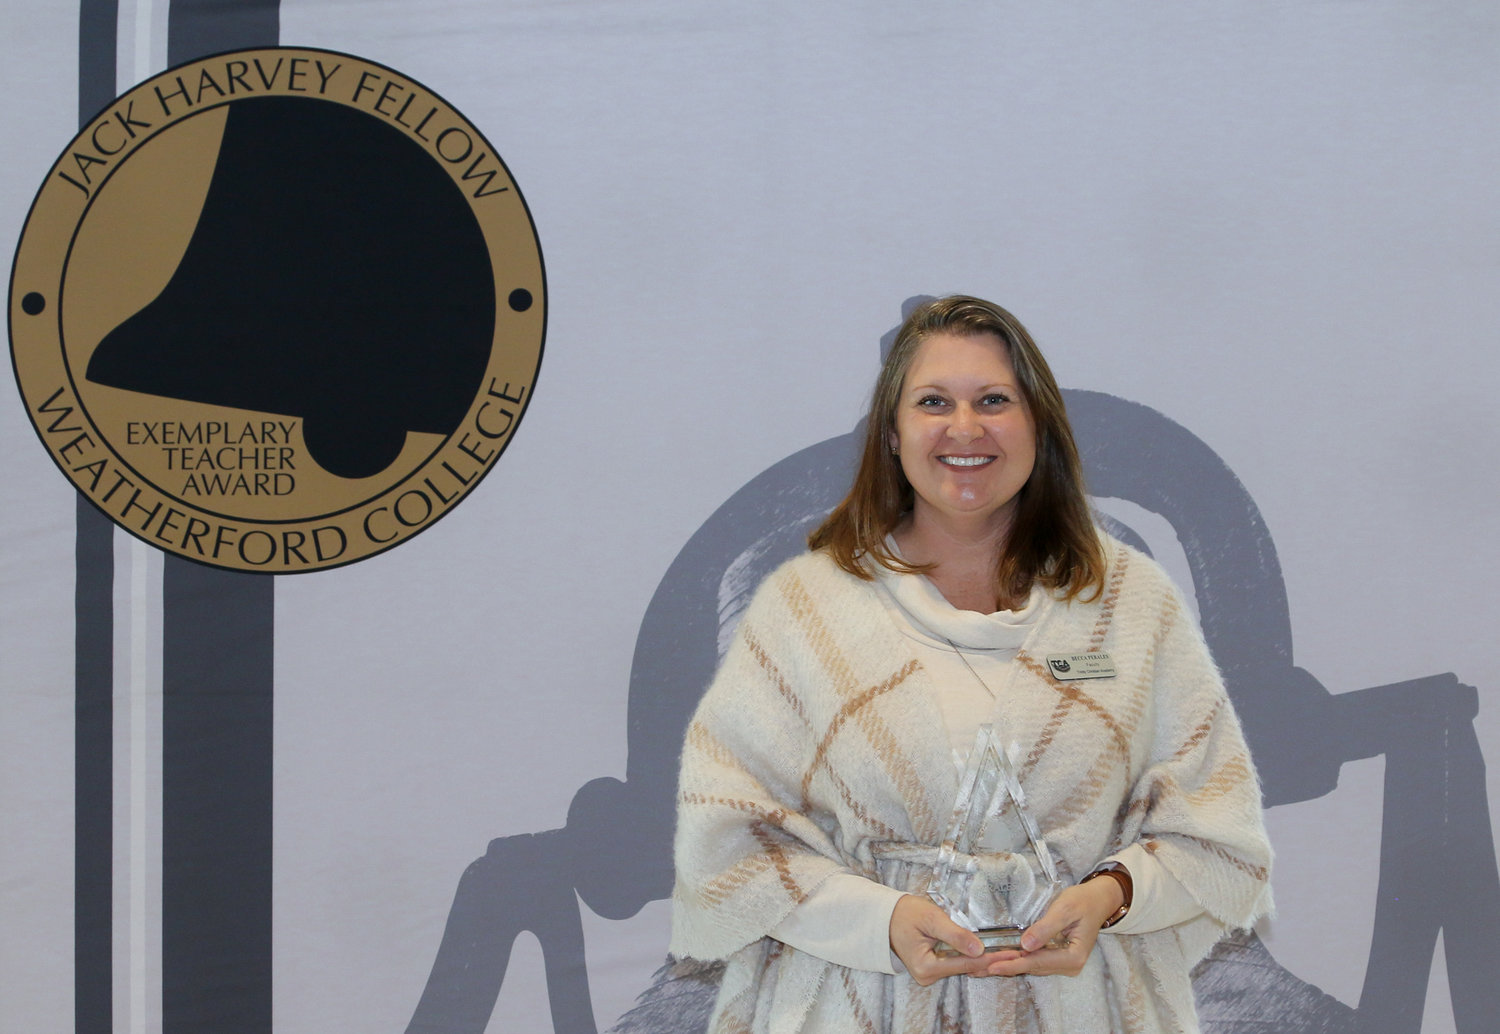 Trinity Christian Academy teacher Becca Perales was a recipient of the 2023 Jack Harvey Award.